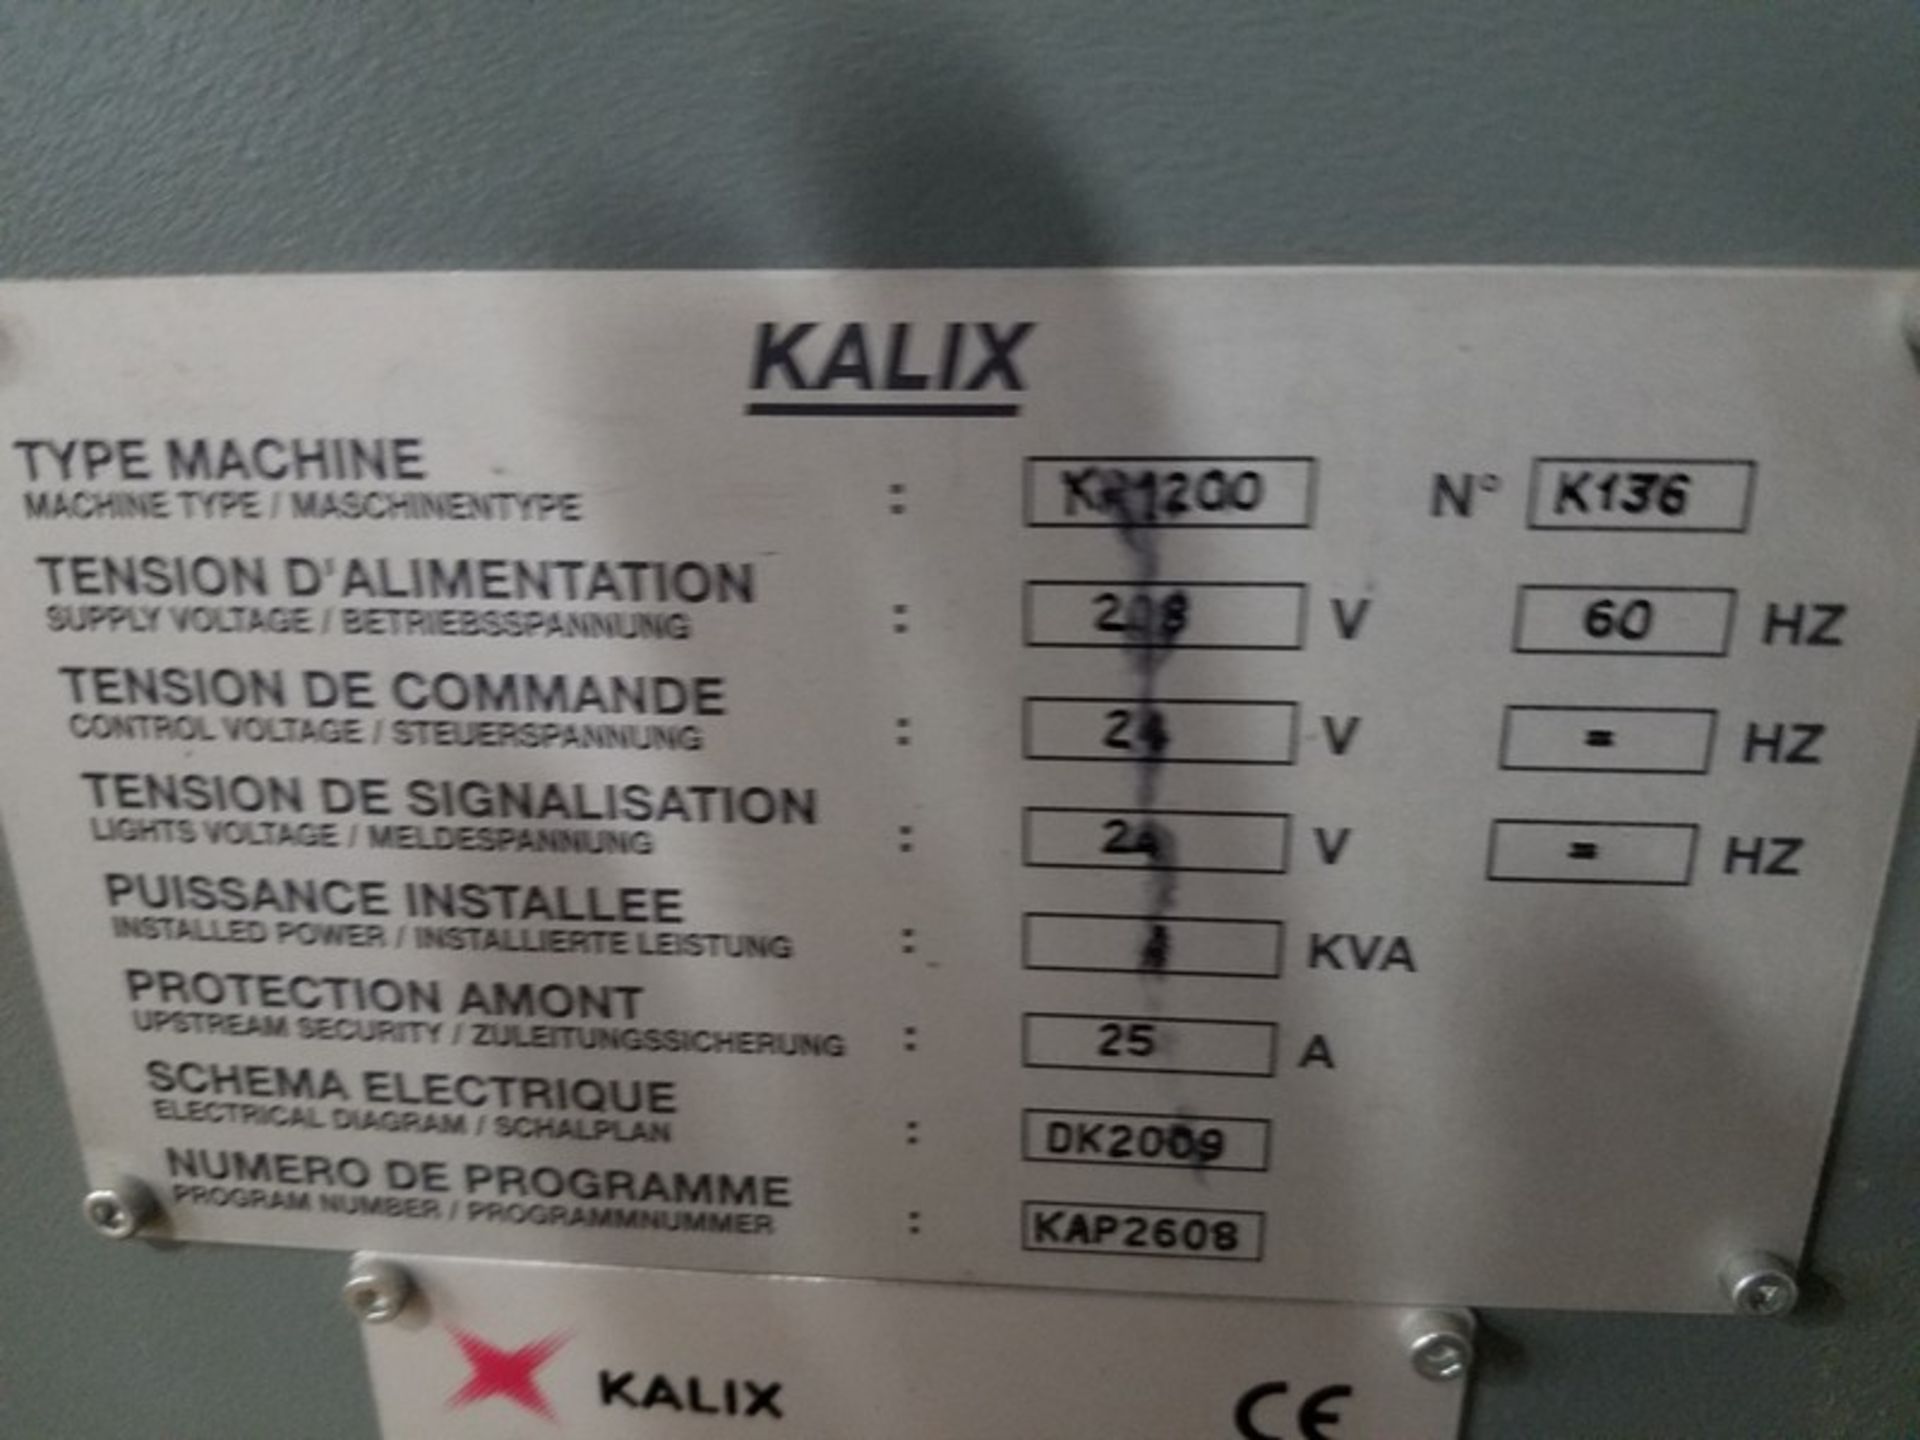 Kalix KP1200 Cartoner, cosmetic applications, serial # K136, volt 208, Date 07/2012, 120 ppm ( - Image 16 of 17